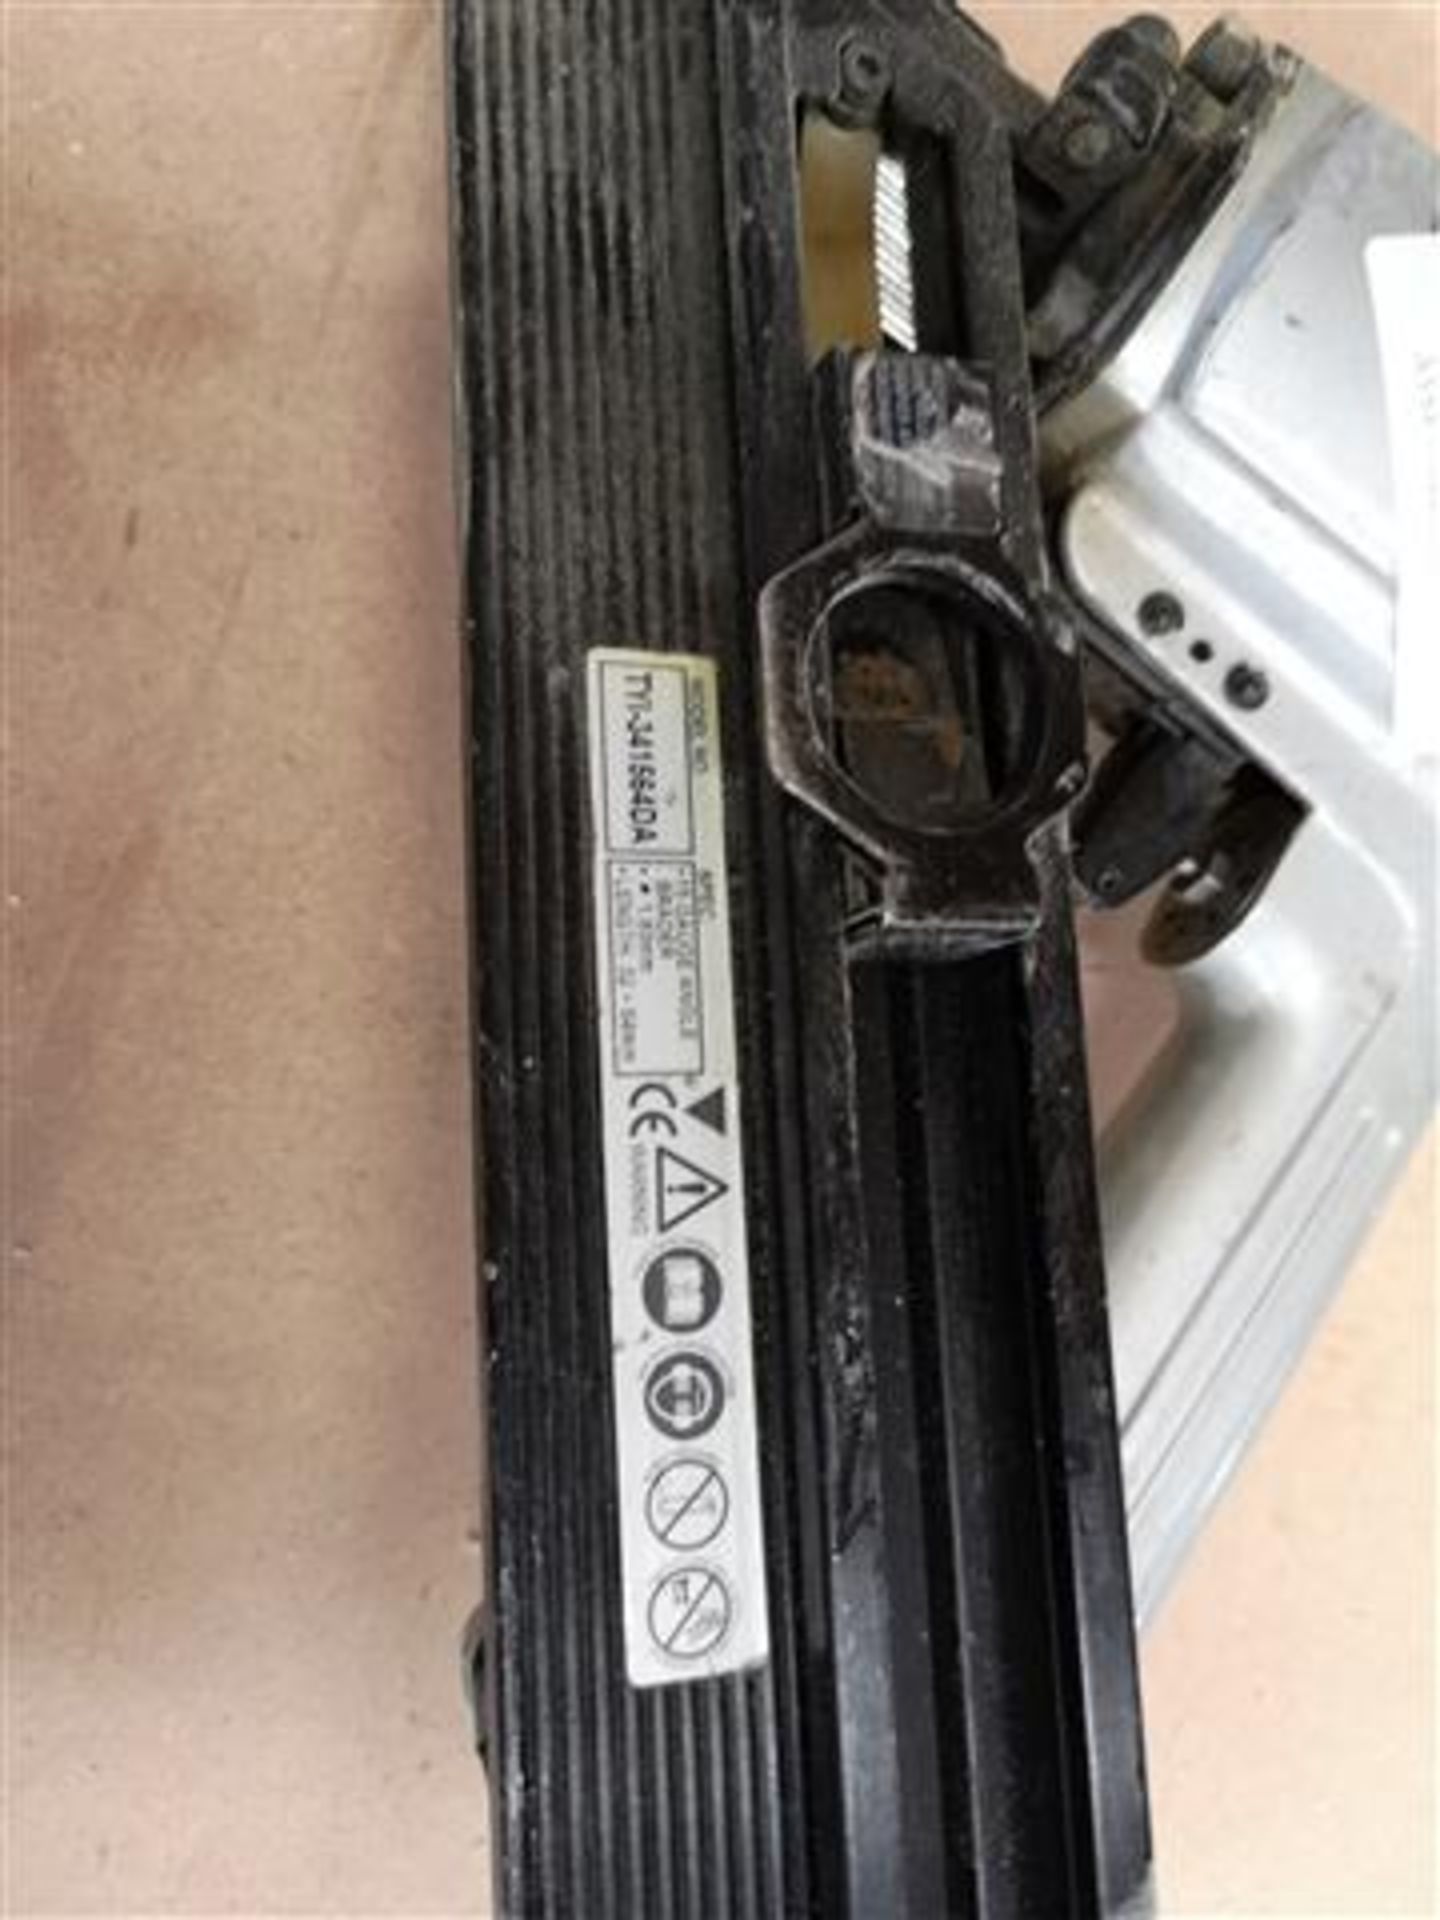 ACE & K TYI-341564DA 34 Degrees 15 Gauge Angled Finish Nailer Nail Gun - Image 2 of 3